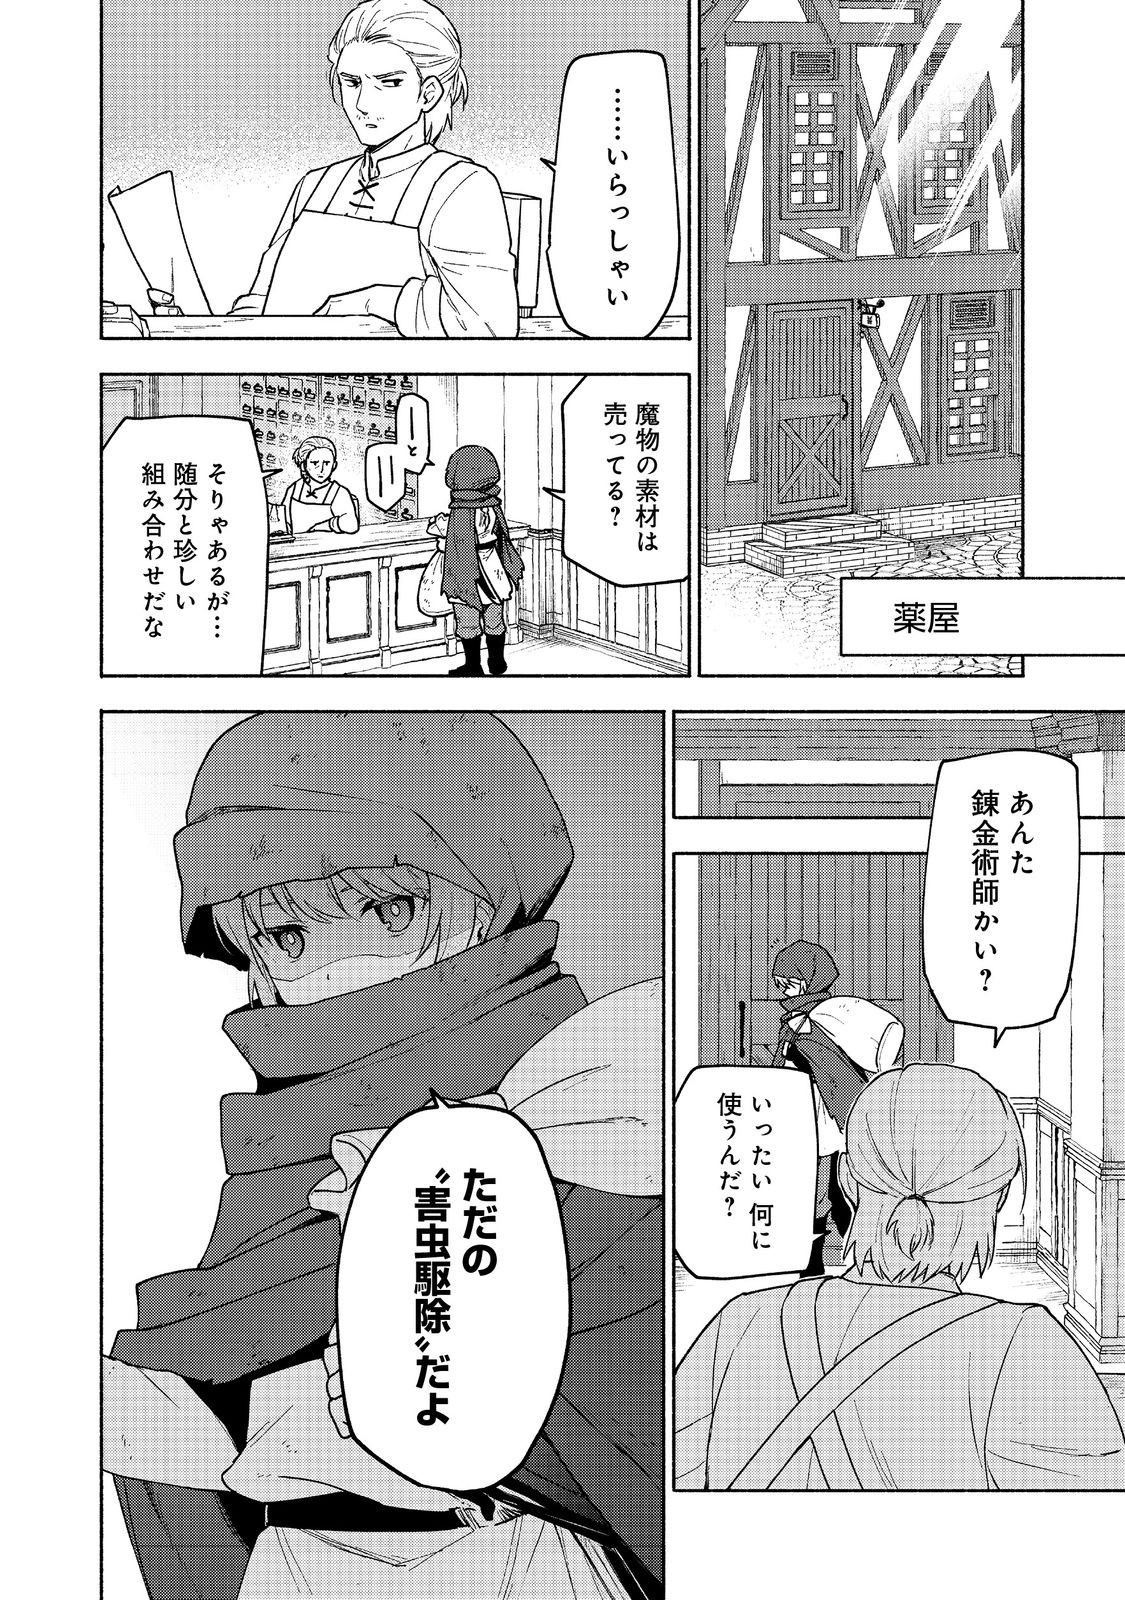 Otome Game no Heroine de Saikyou Survival - Chapter 19.2 - Page 2